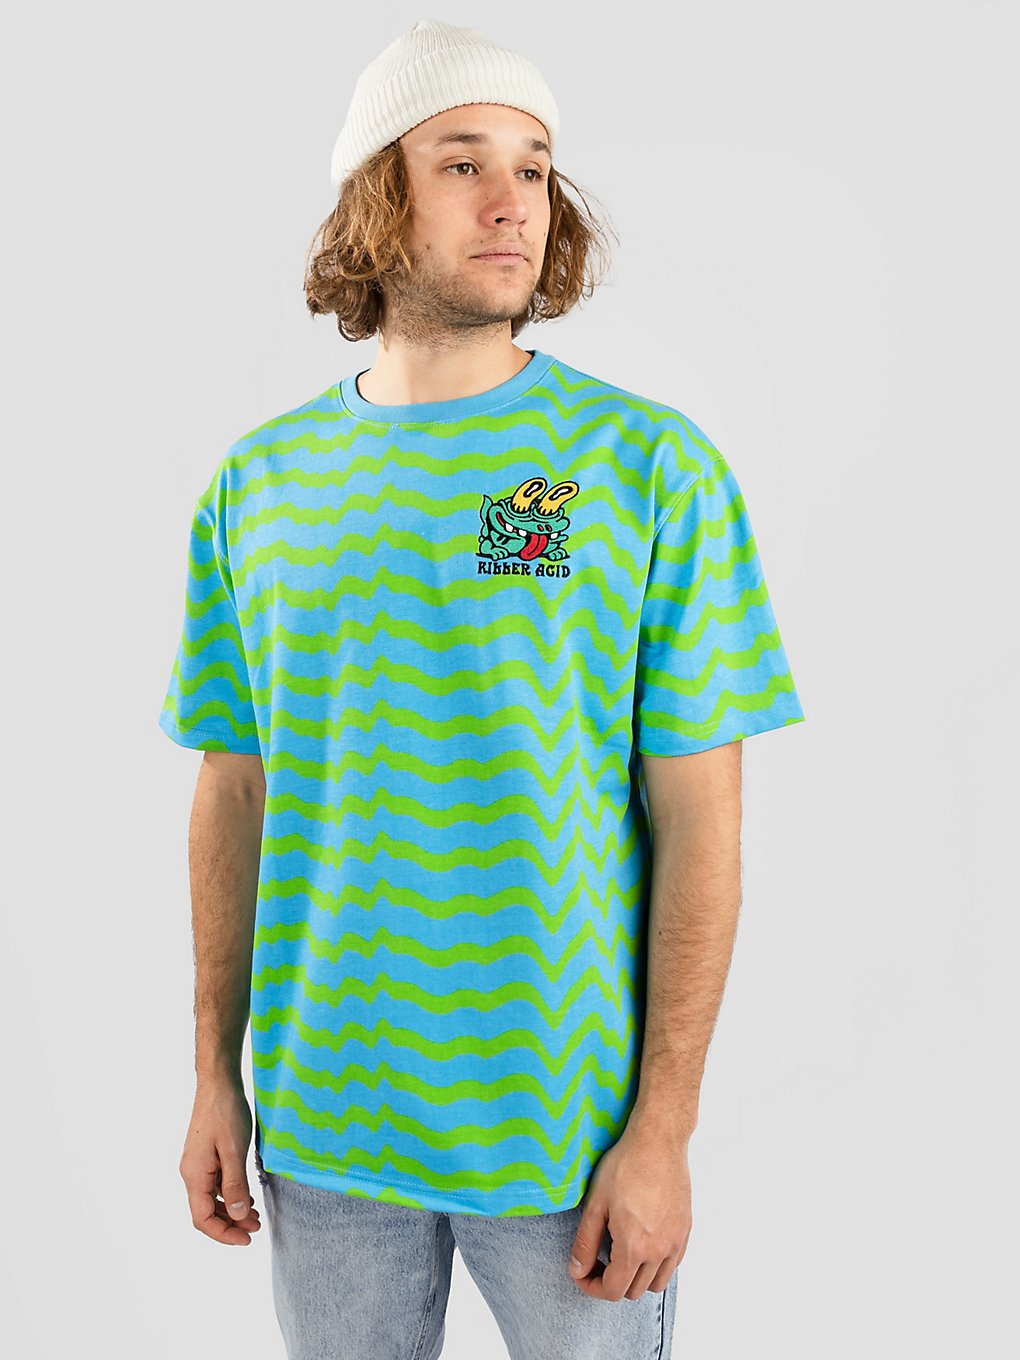 Killer Acid Wavy Stripe Frog T-Shirt green kaufen